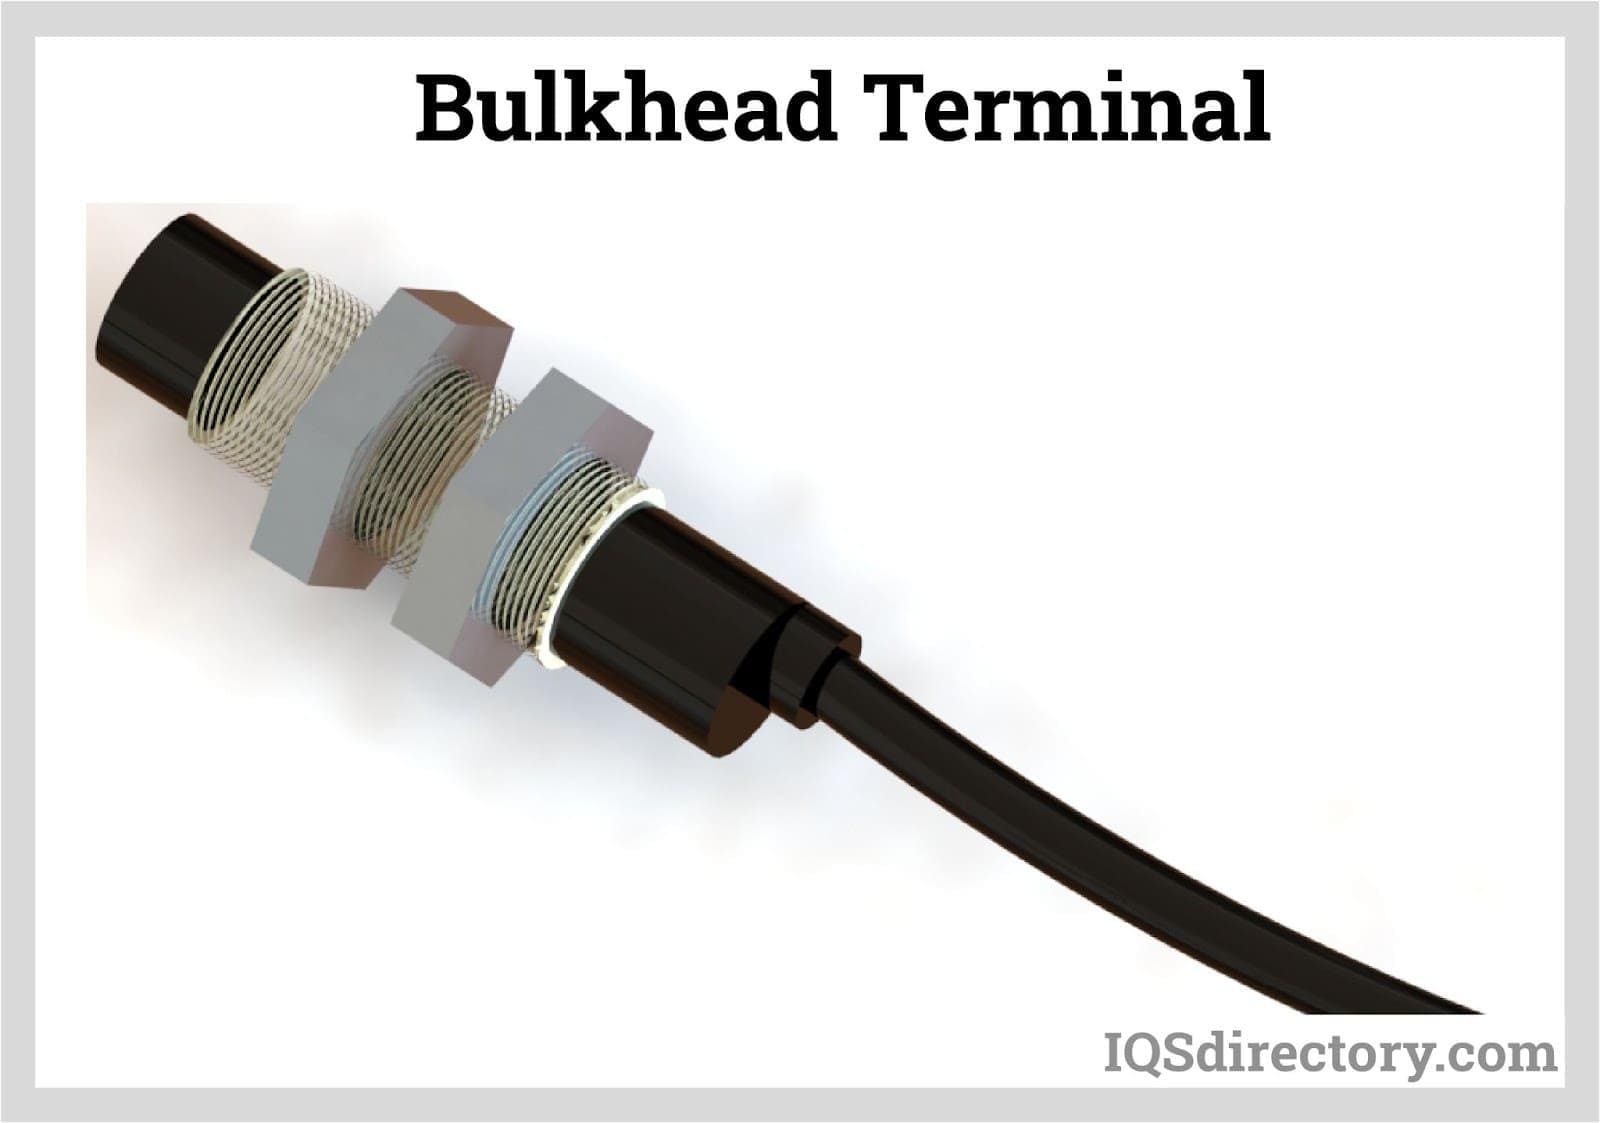 Bulkhead Terminal